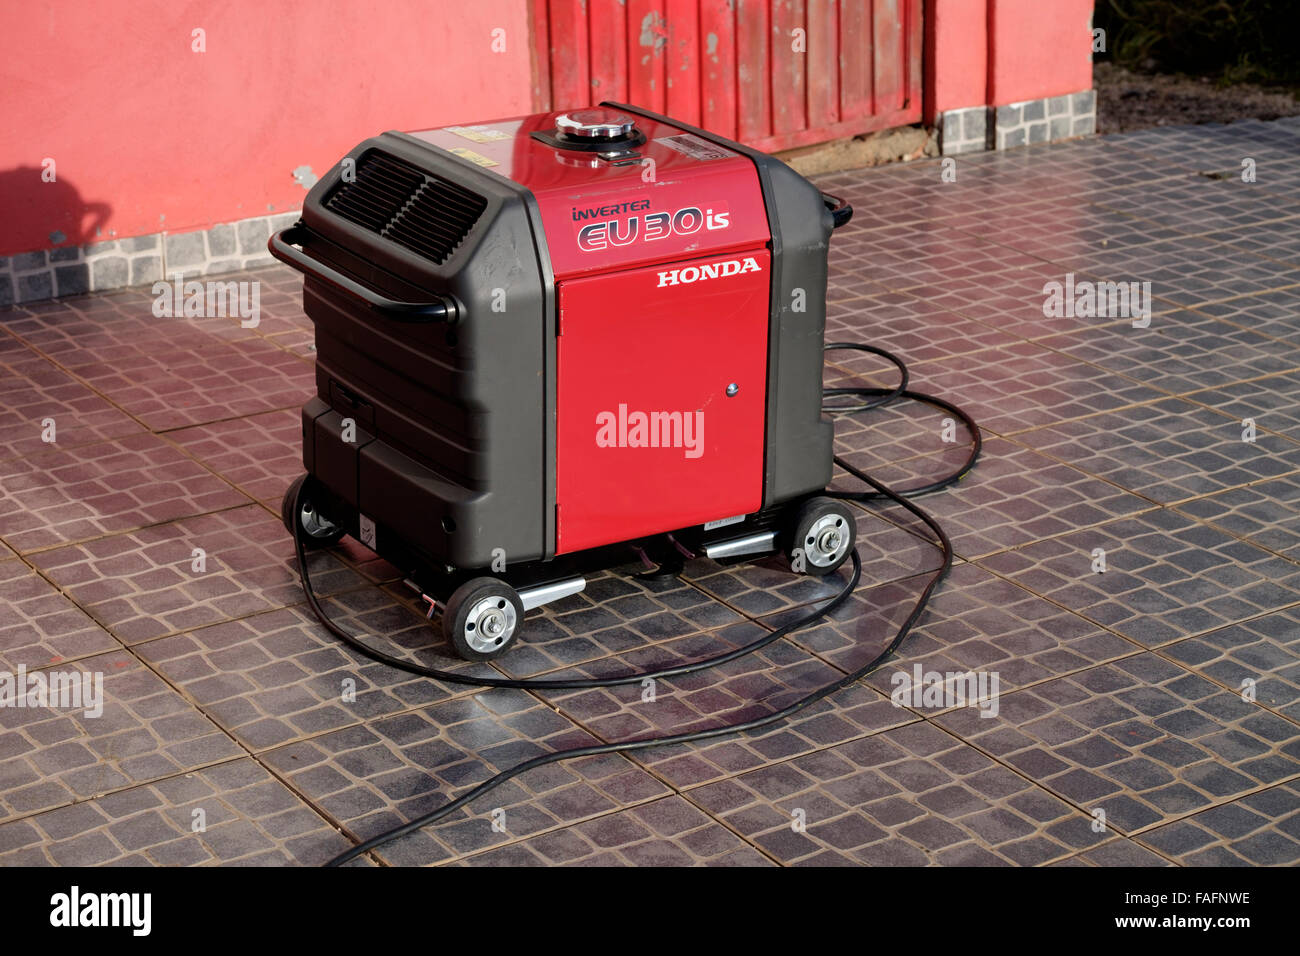 Honda EU 30is portable power generator with inverter technology Stock Photo  - Alamy